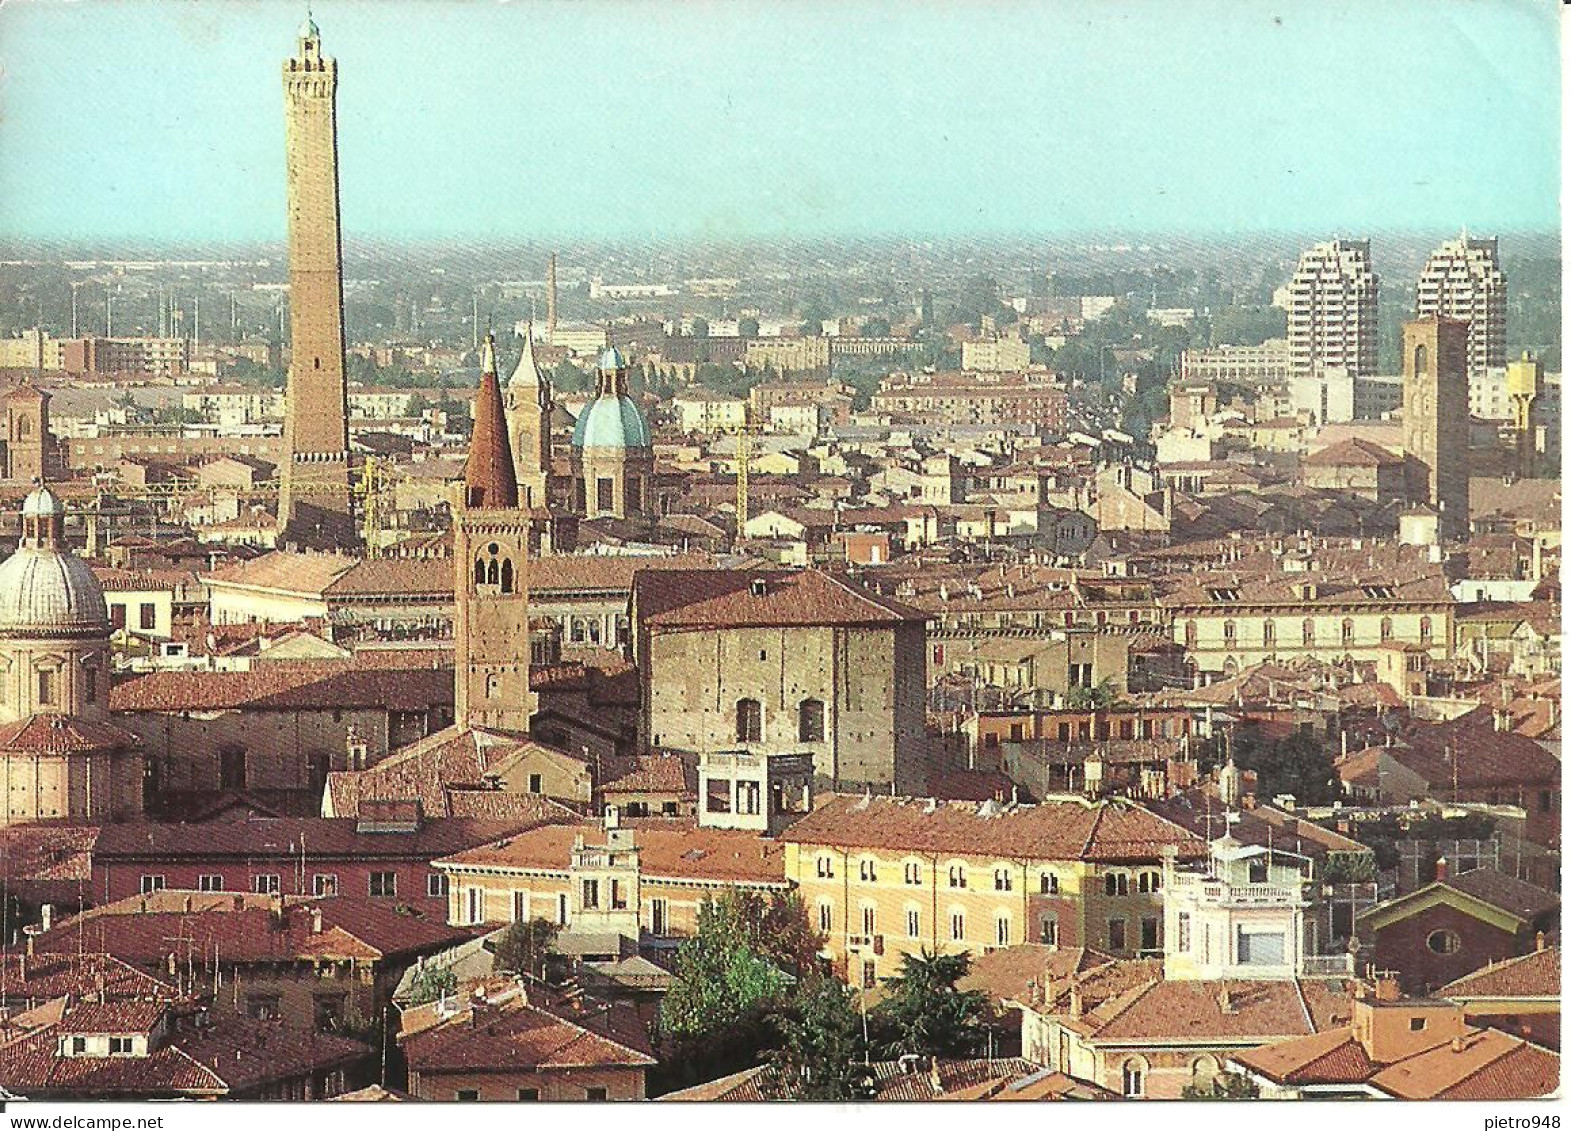 Bologna (E. Romagna) Panorama Dall'alto, General View, Vue Generale, Gesamtansicht - Bologna